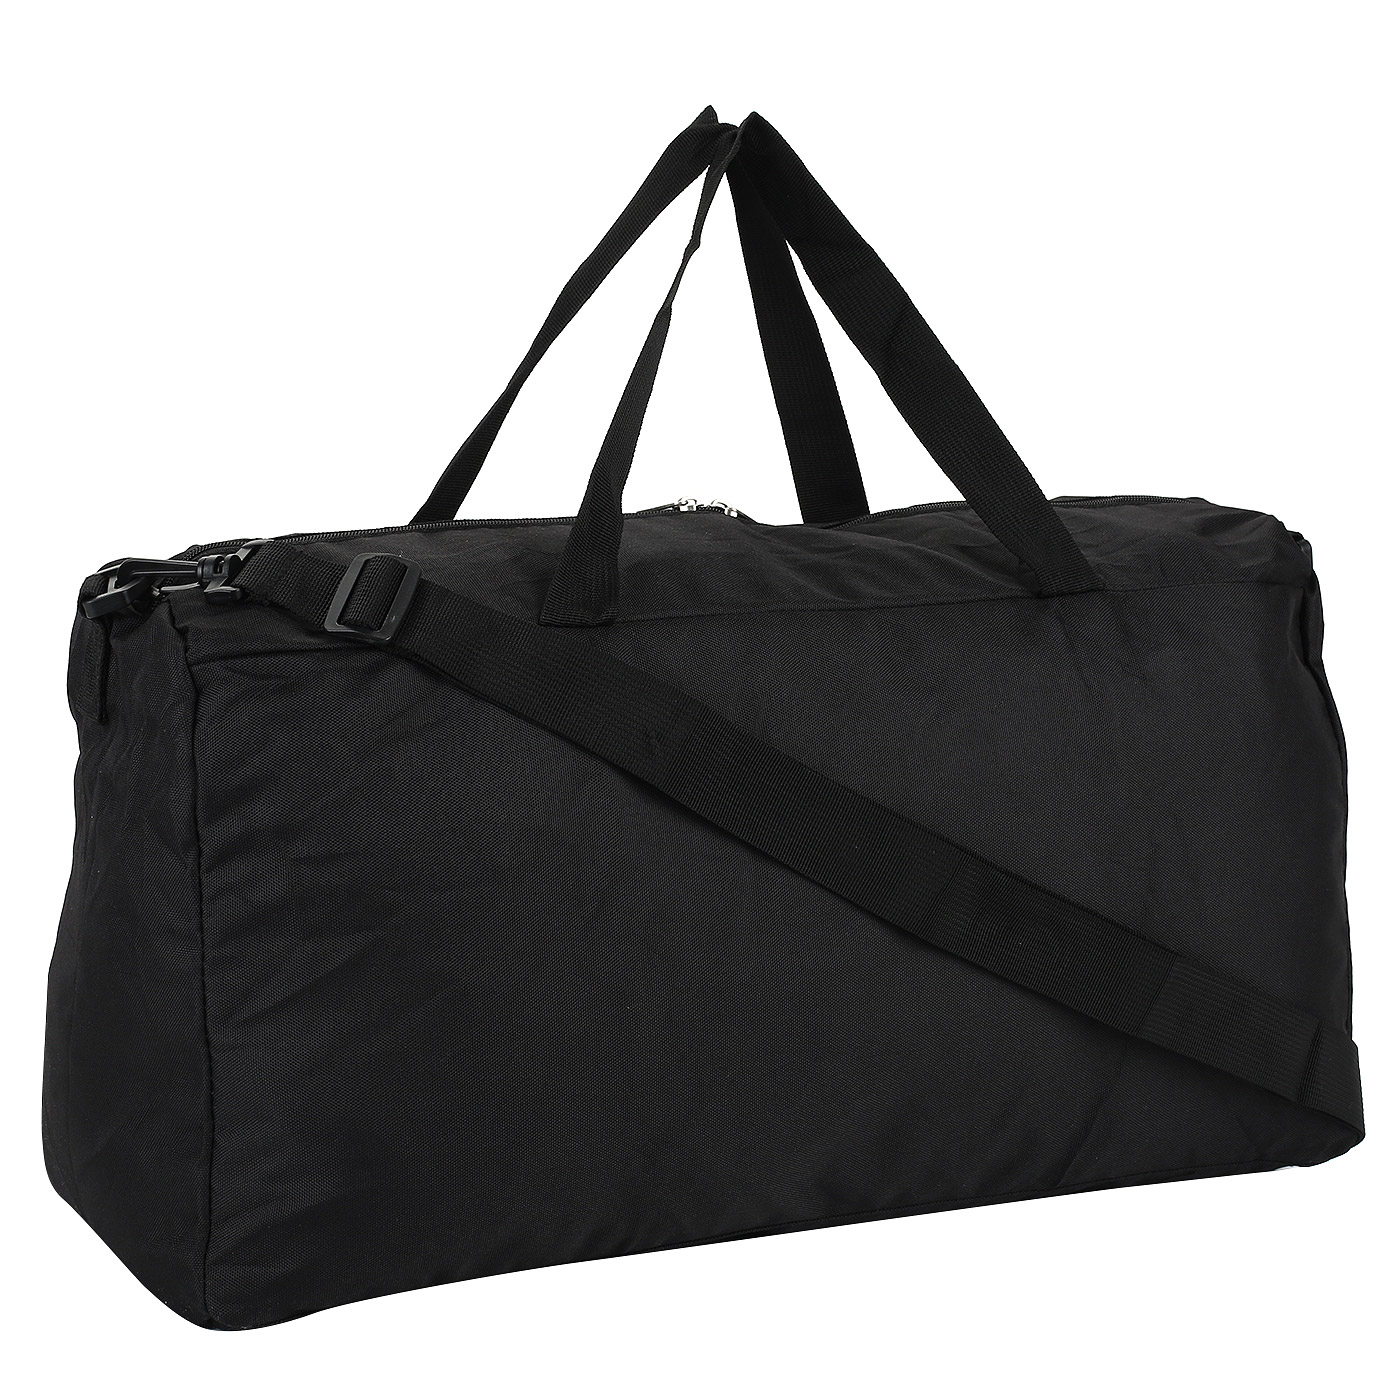 Дорожная сумка с плечевым ремнем Samsonite Packing Accessories